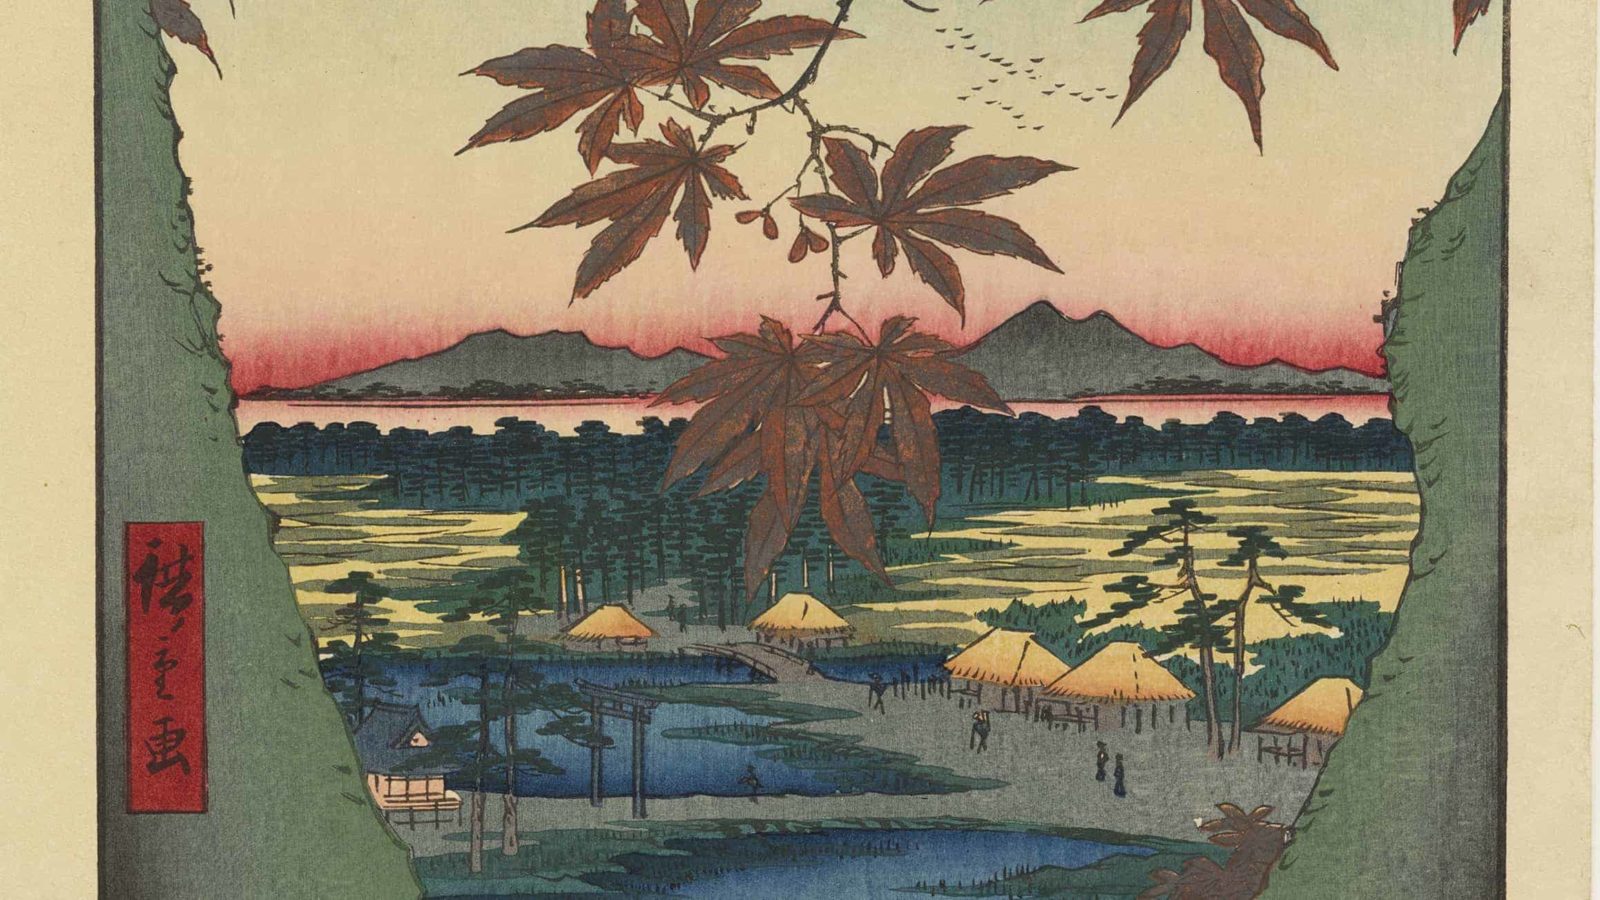 Utagawa Hiroshige, Tekoma Shrine, 1857, from 100 Views of Edo. Courtesy of the Clark Art Institute